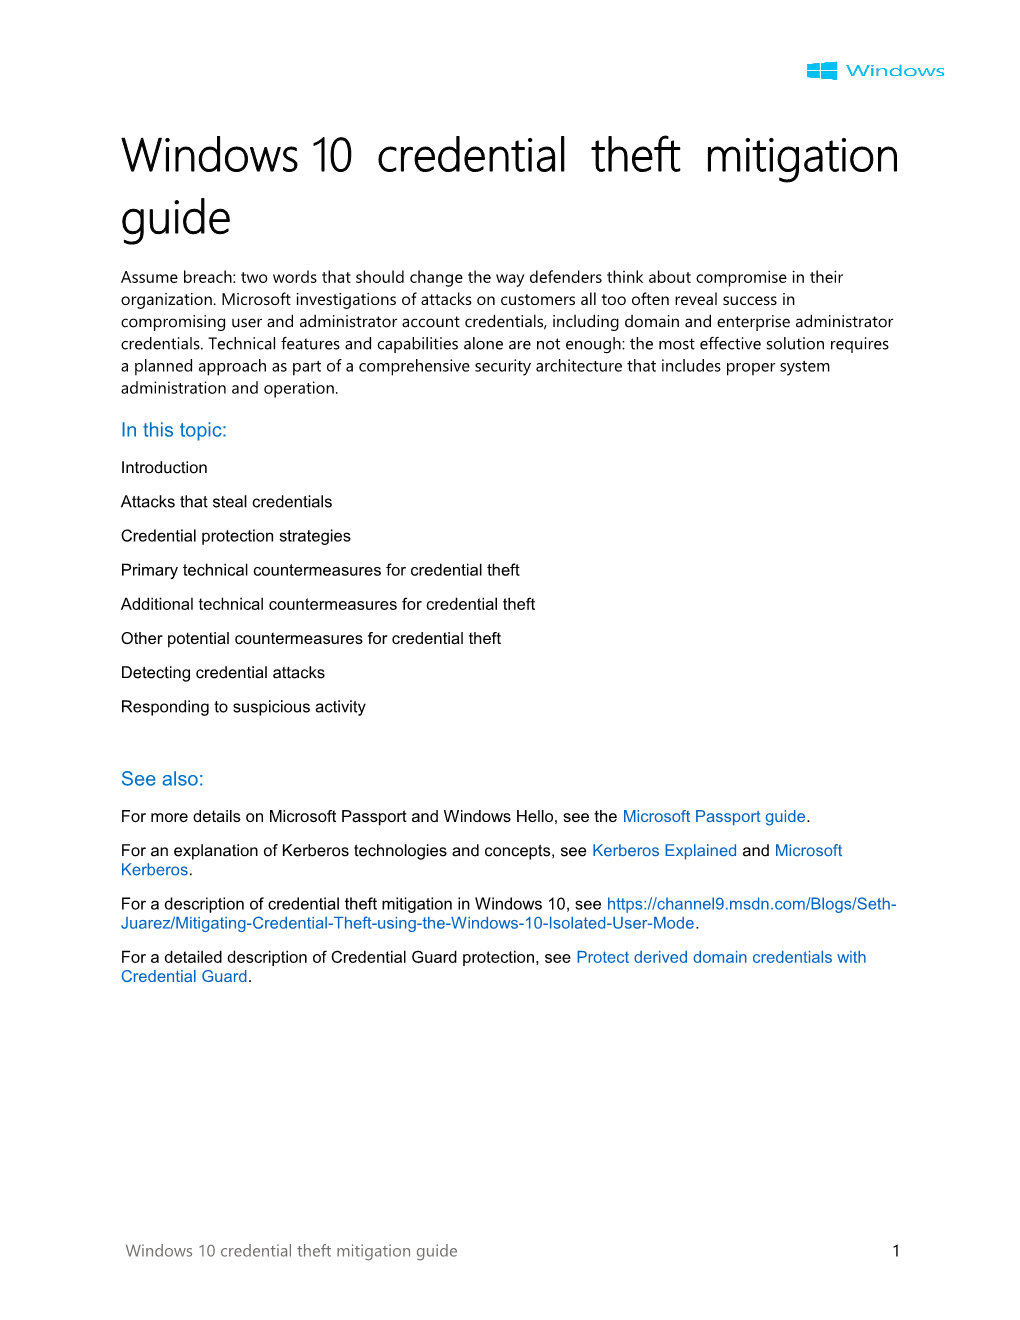 Windows 10 Credential Theft Mitigation Guide